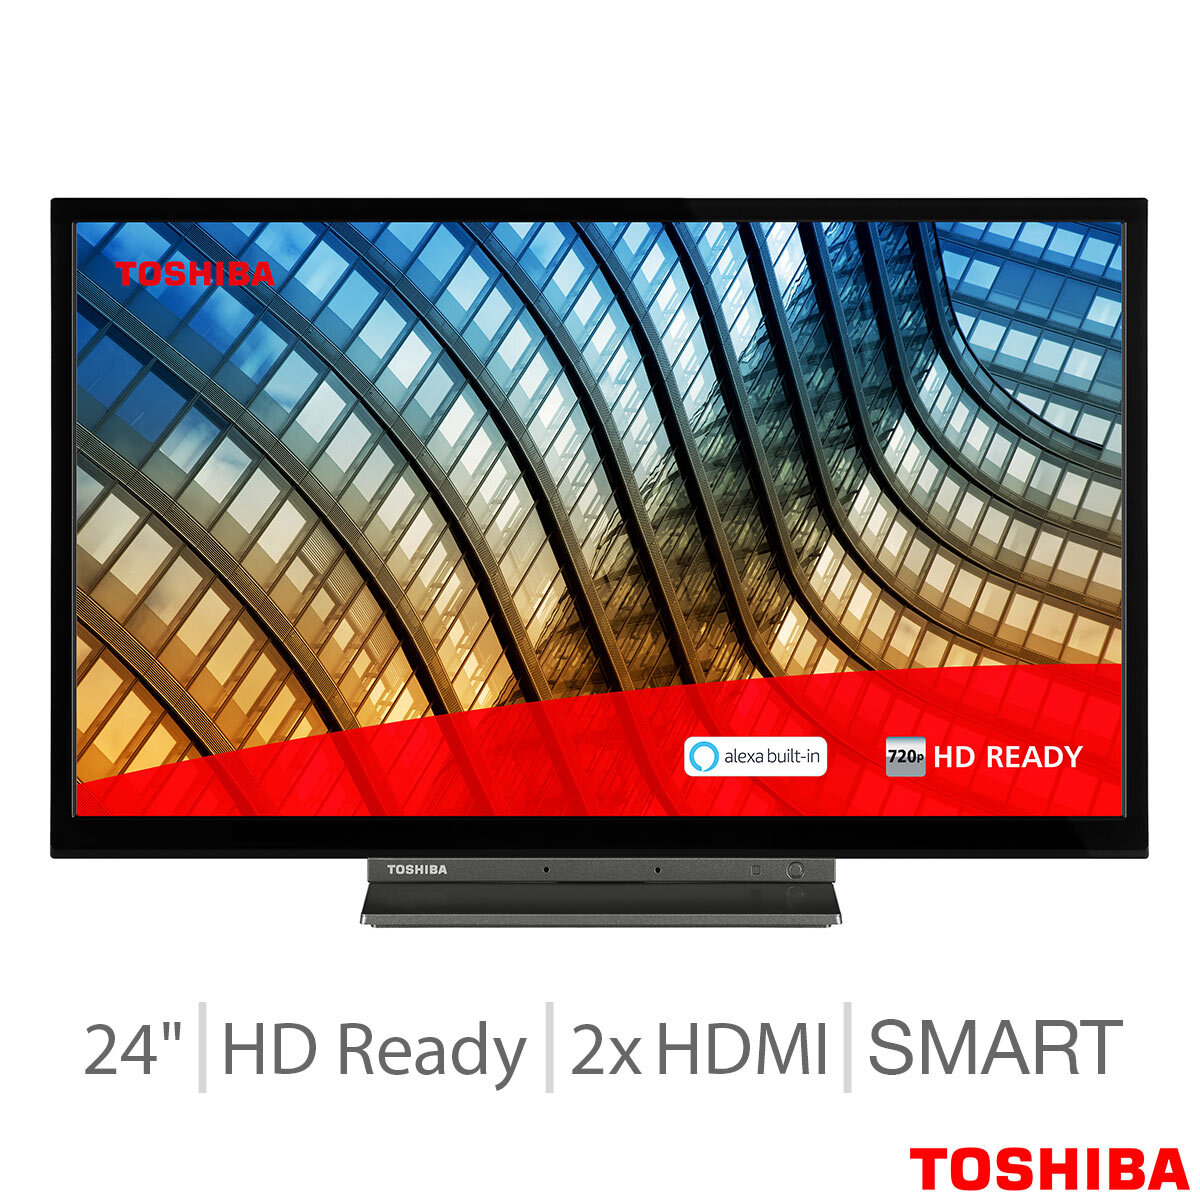 Smart Fire-TV Toshiba modelo 32LF221U21, 32-inch HD 720p (UNBOXING